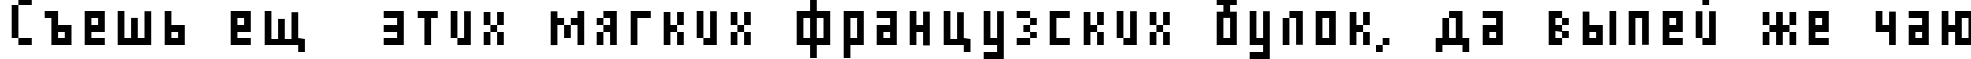 Пример написания шрифтом AuX DotBitC Compressed текста на русском